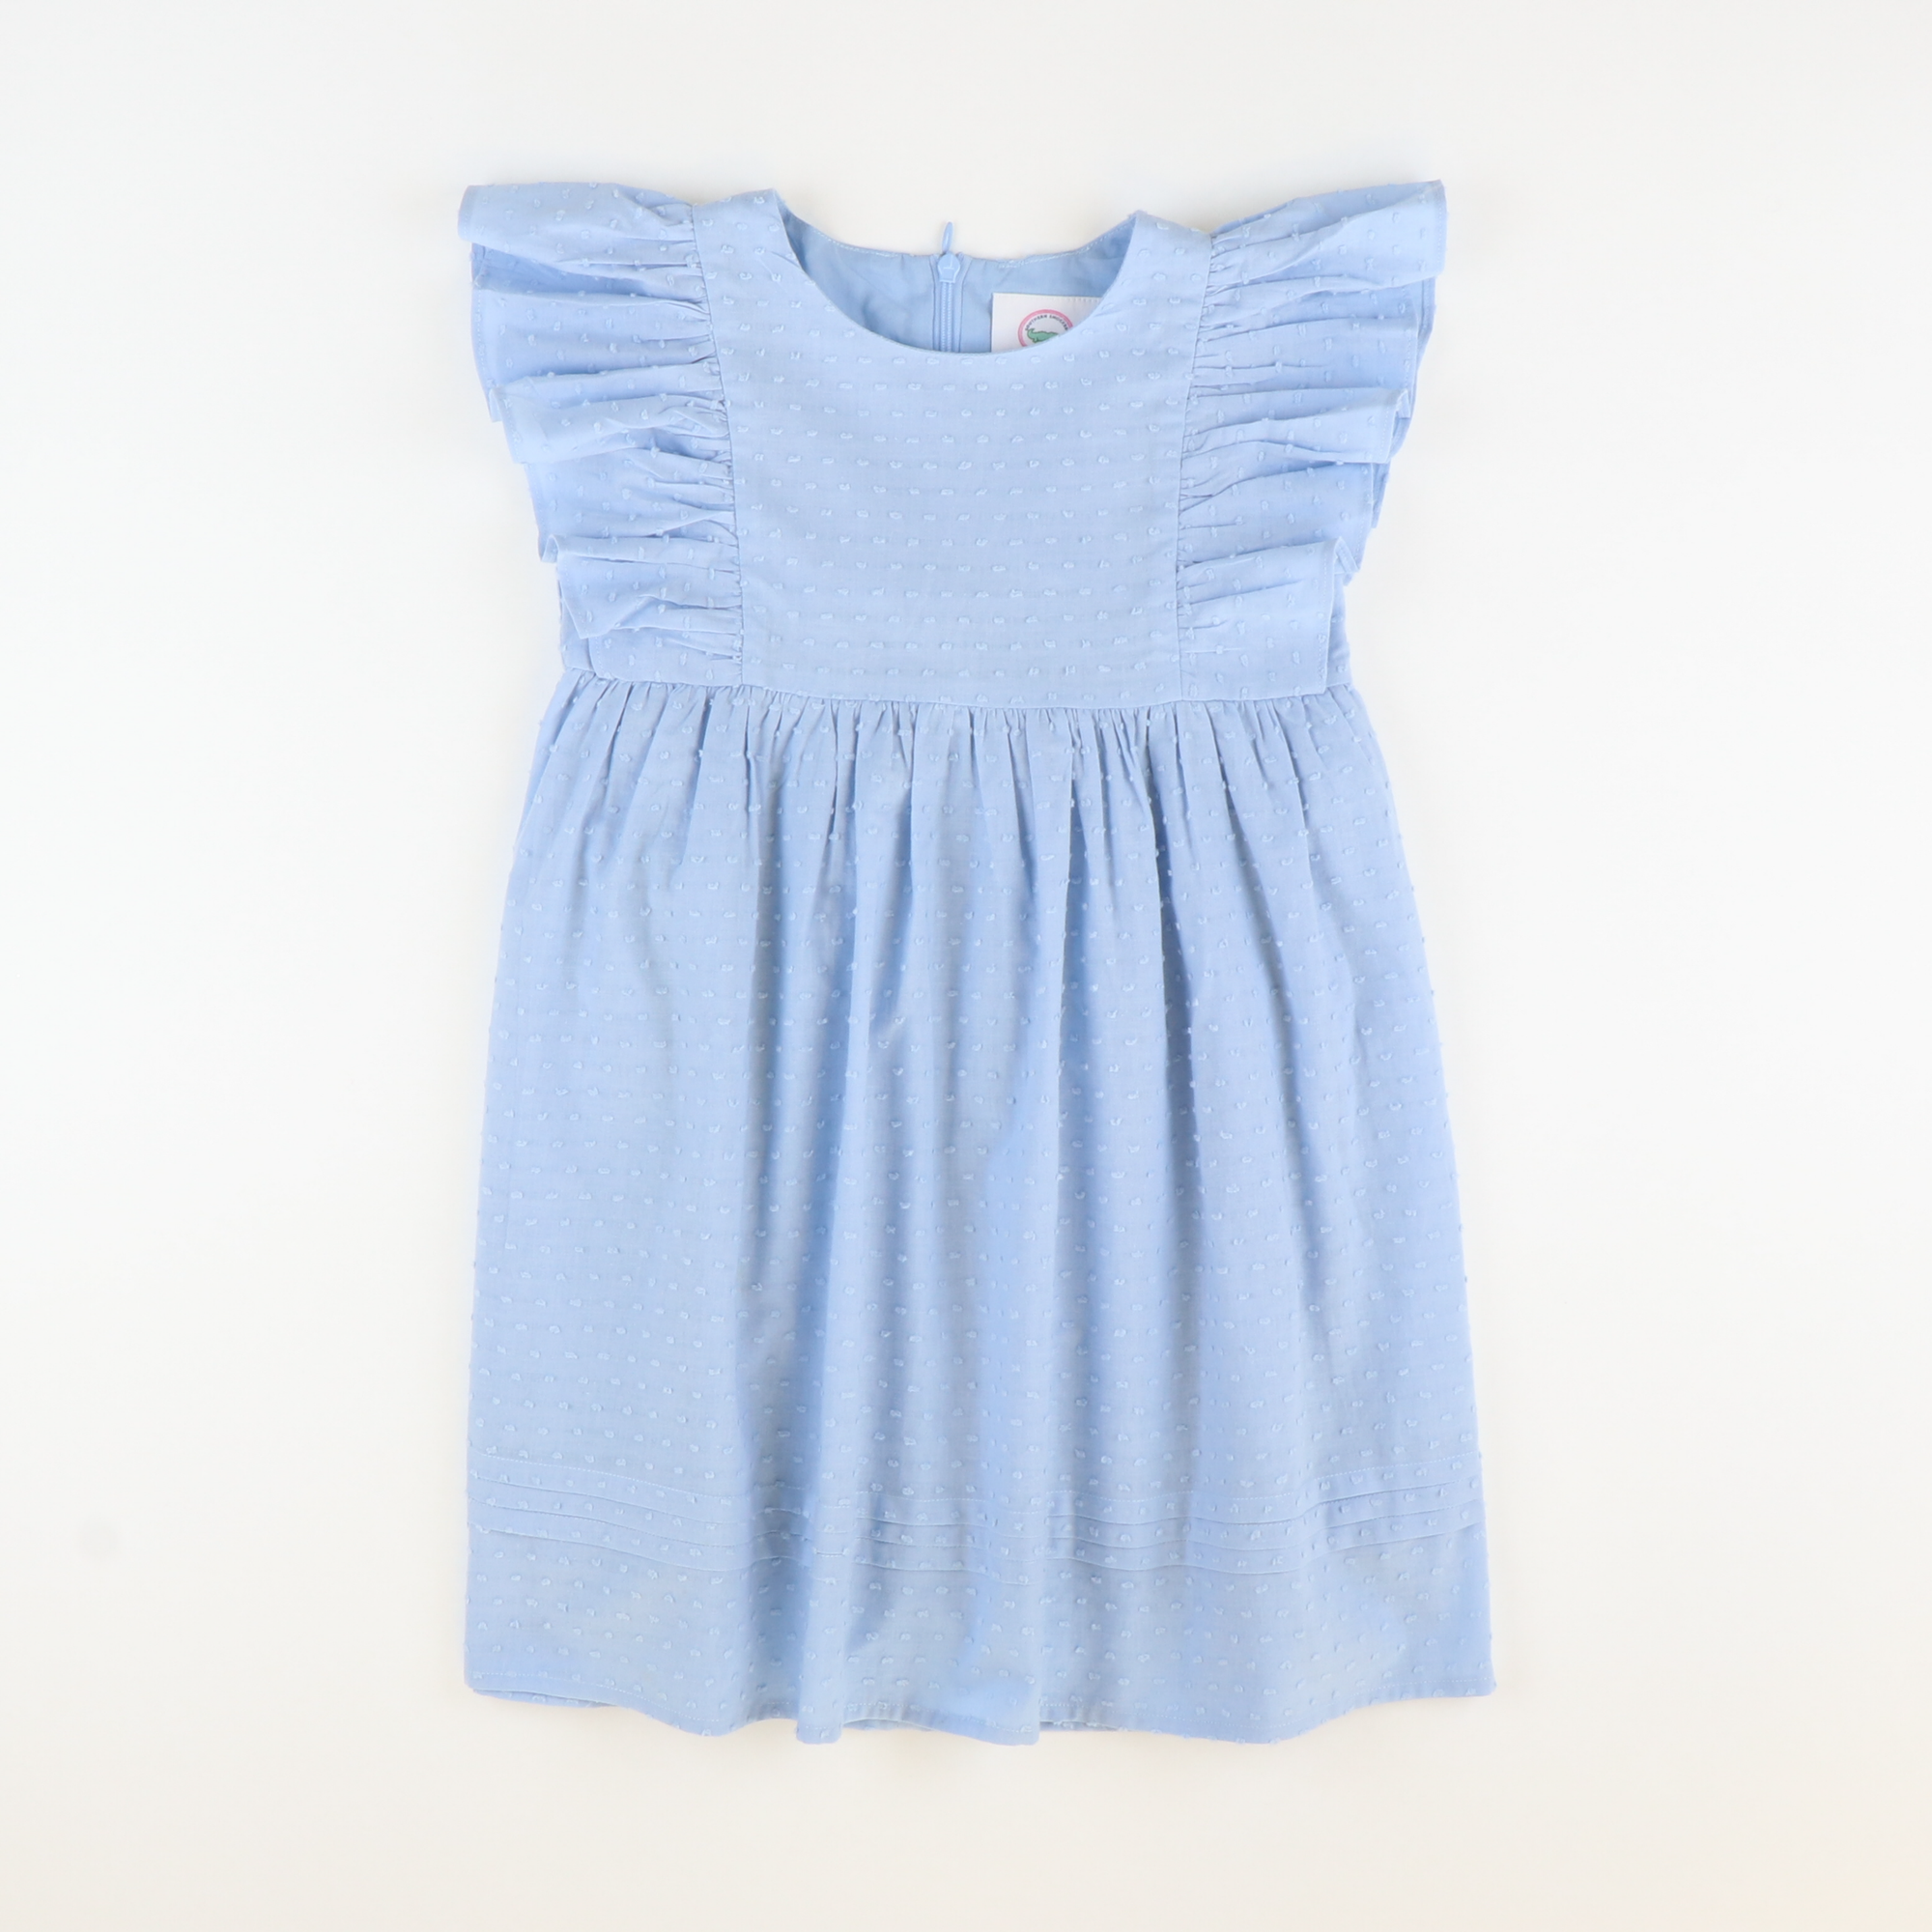 Pinafore Dress - Blue Swiss Dot